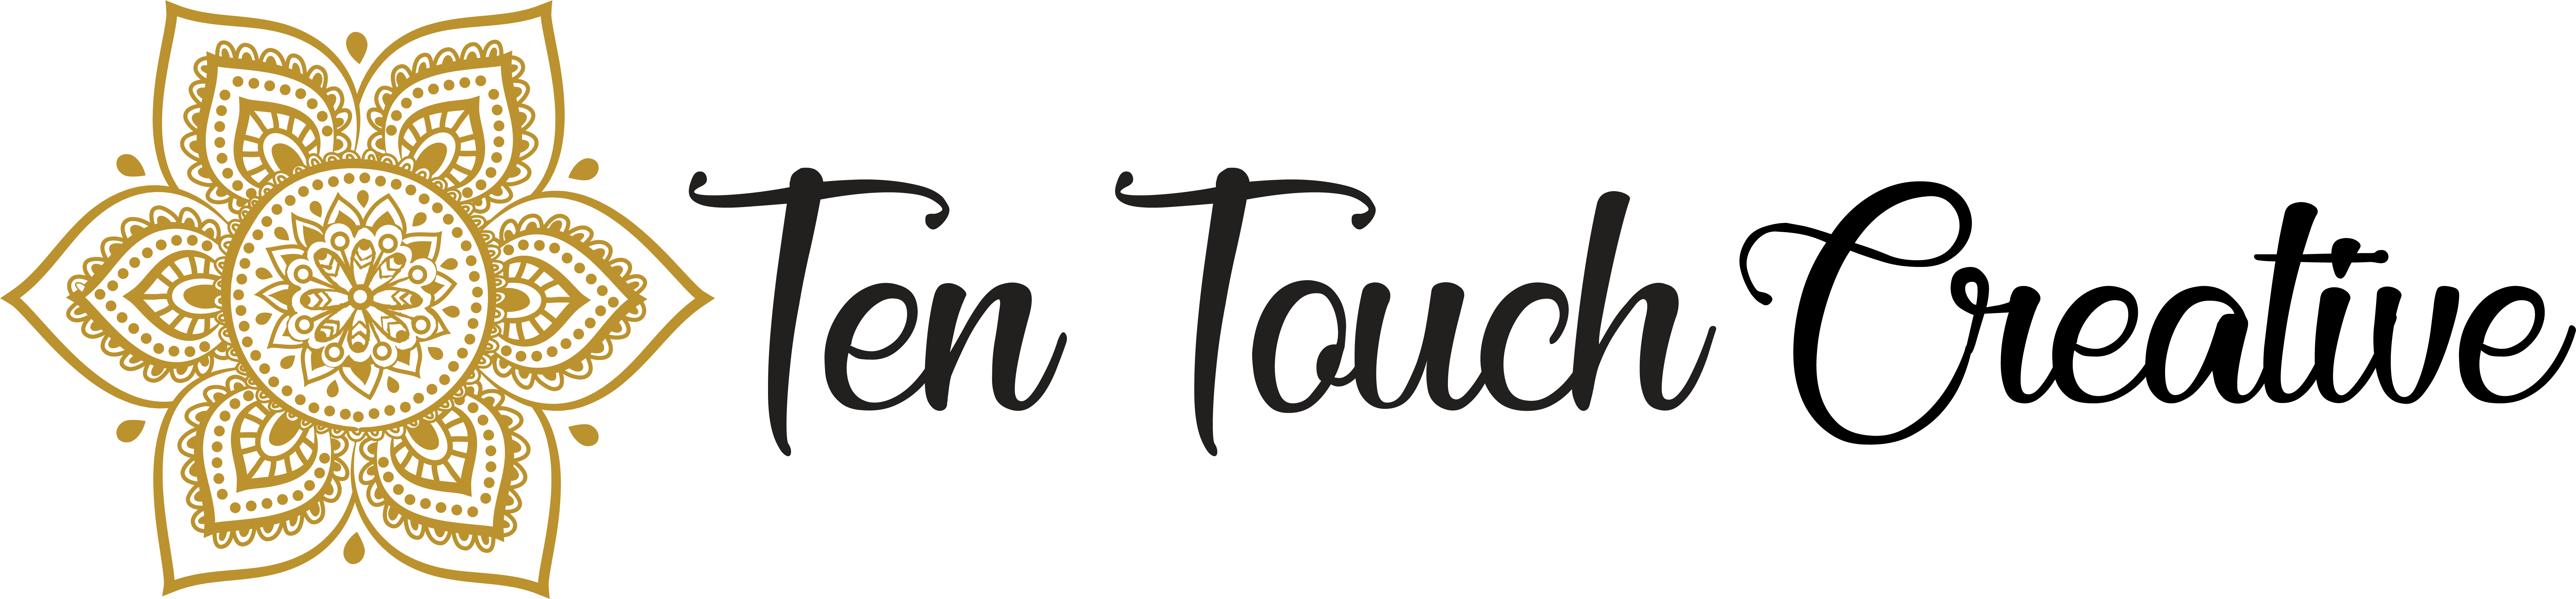 Ten Touch Creative 